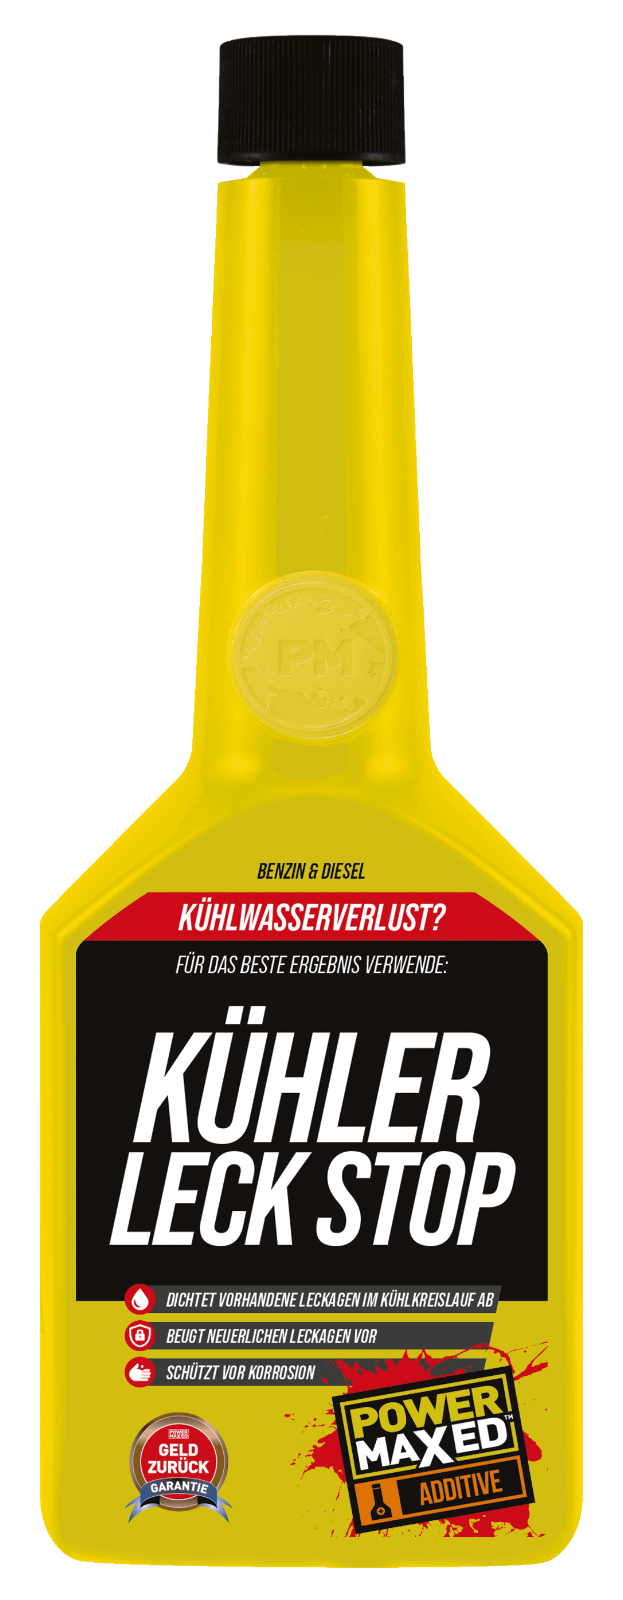 powermaxed-kuehler-leck-stop-flasche-vorne